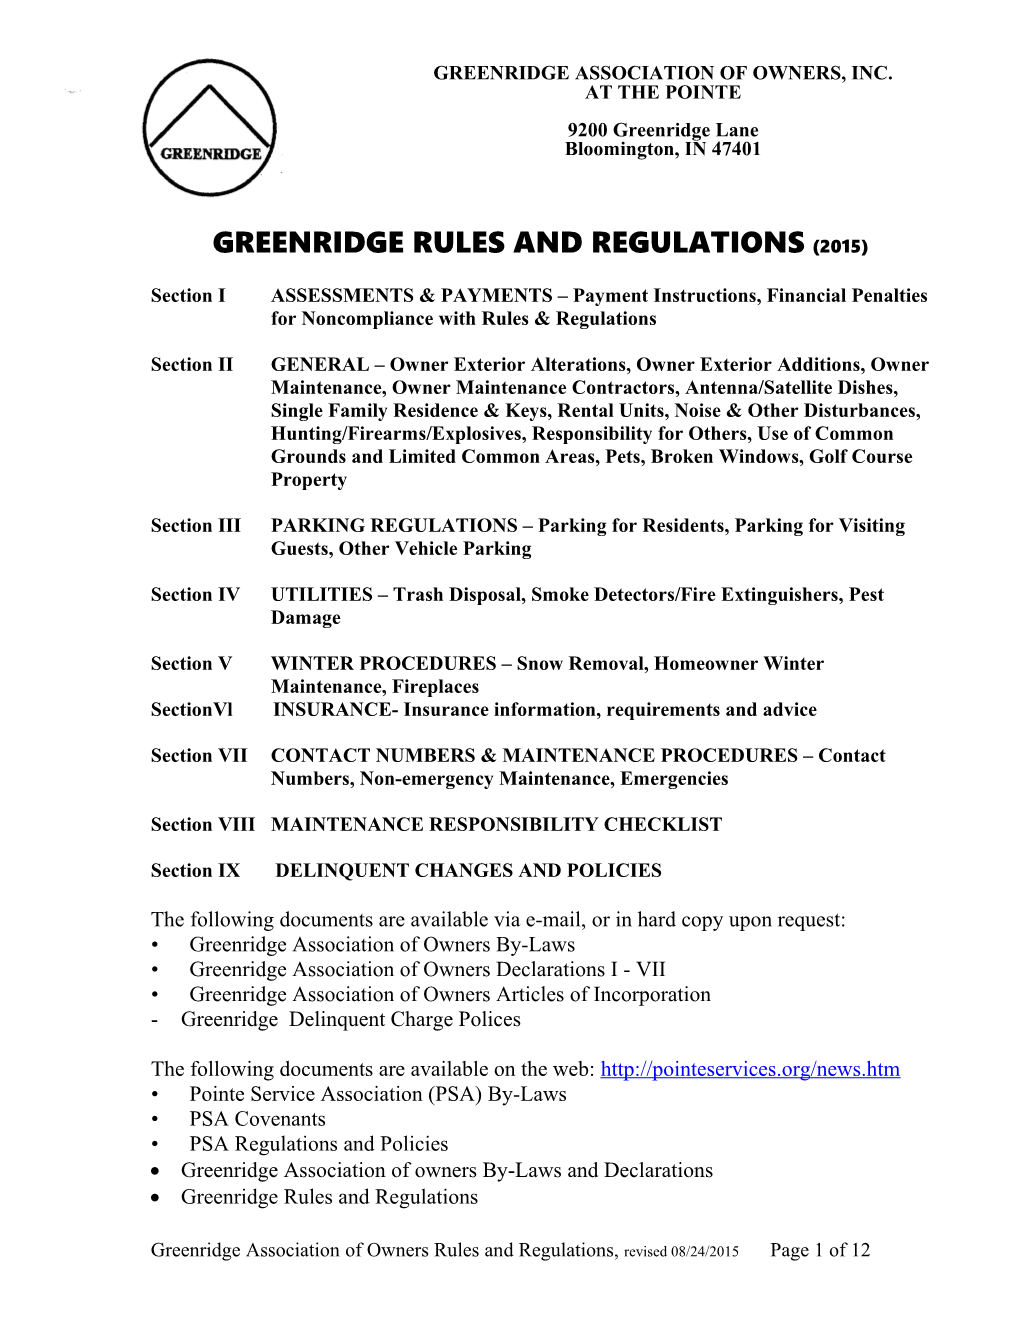 Greenridge Rules and Regulations(2015)